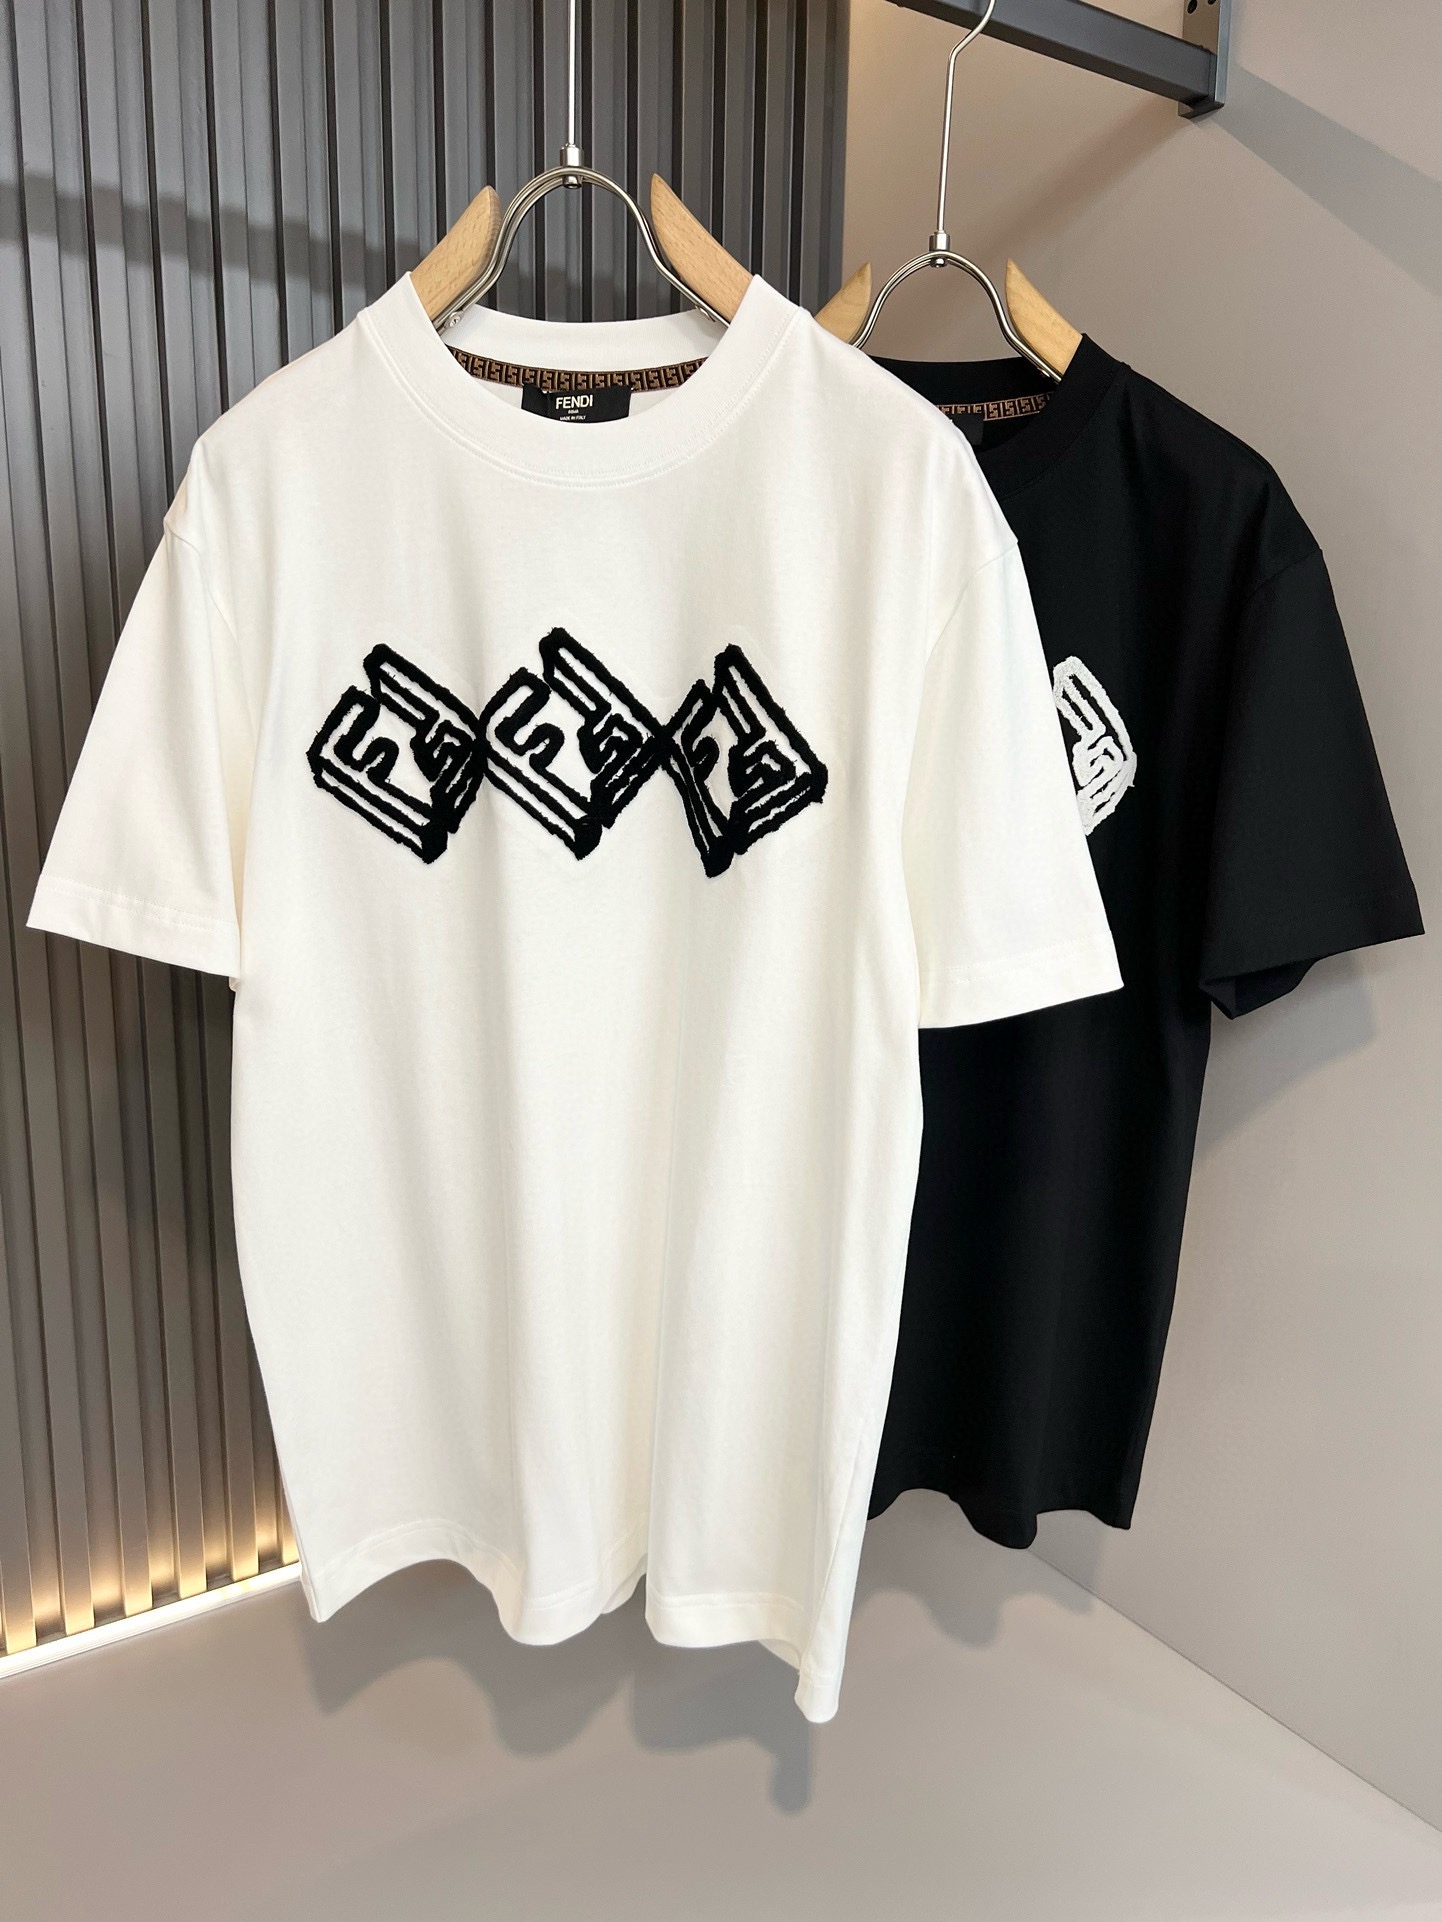 Fendi Clothing T-Shirt Black White Unisex Cotton Spring/Summer Collection Fashion Short Sleeve